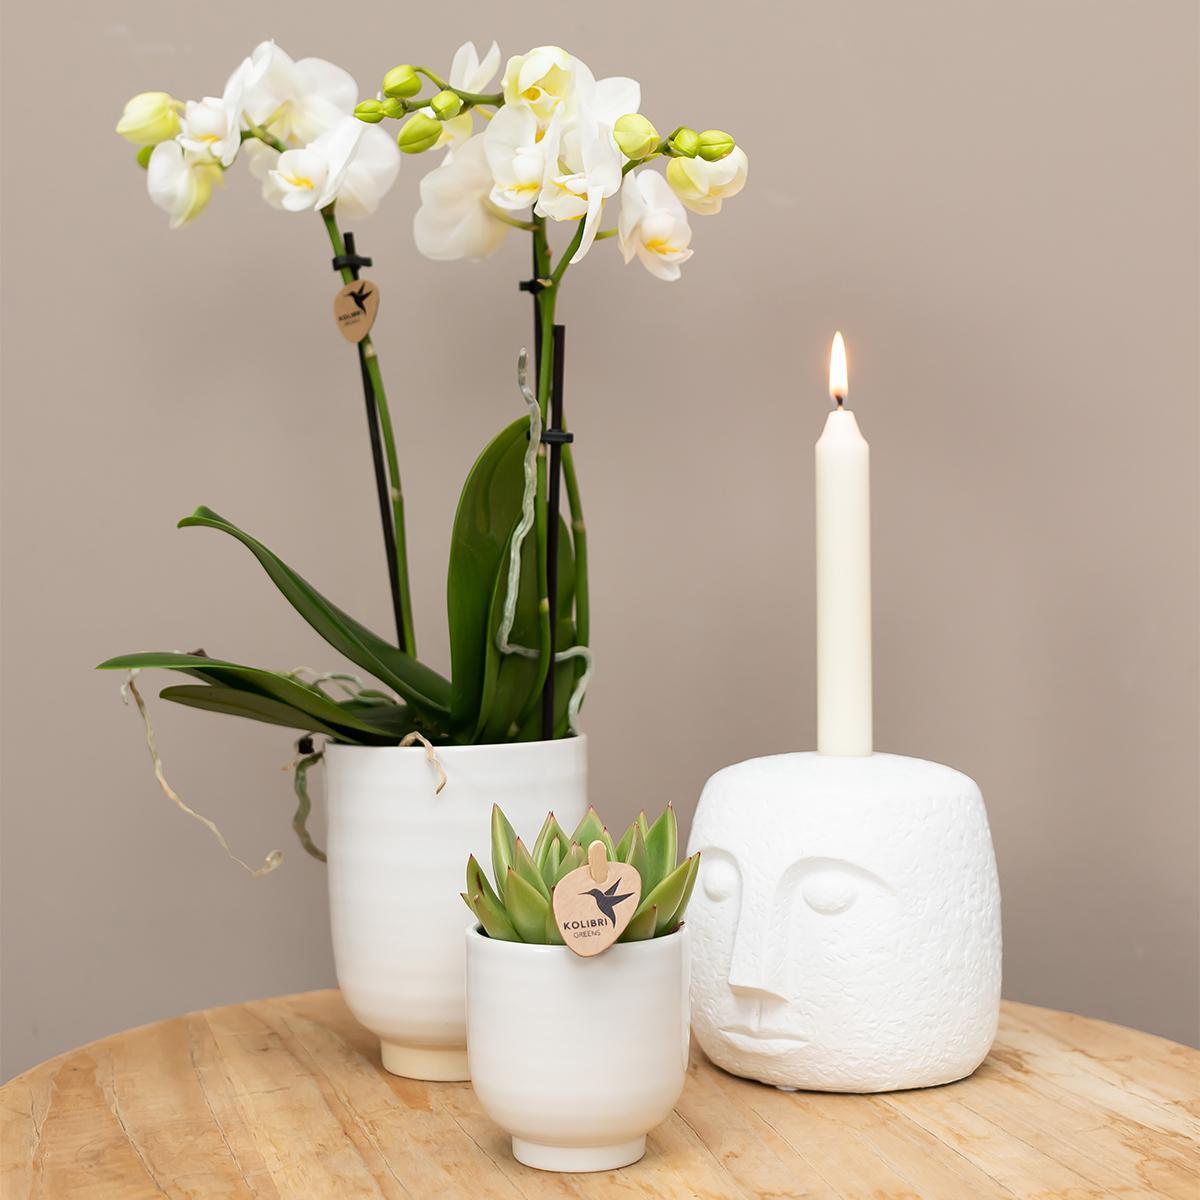 Kolibri Home | Kaarsenstandaard - Candle Face - 12cm hoog Kolibri Home | Kaarsenstandaard - Candle Face - 12cm hoog - White